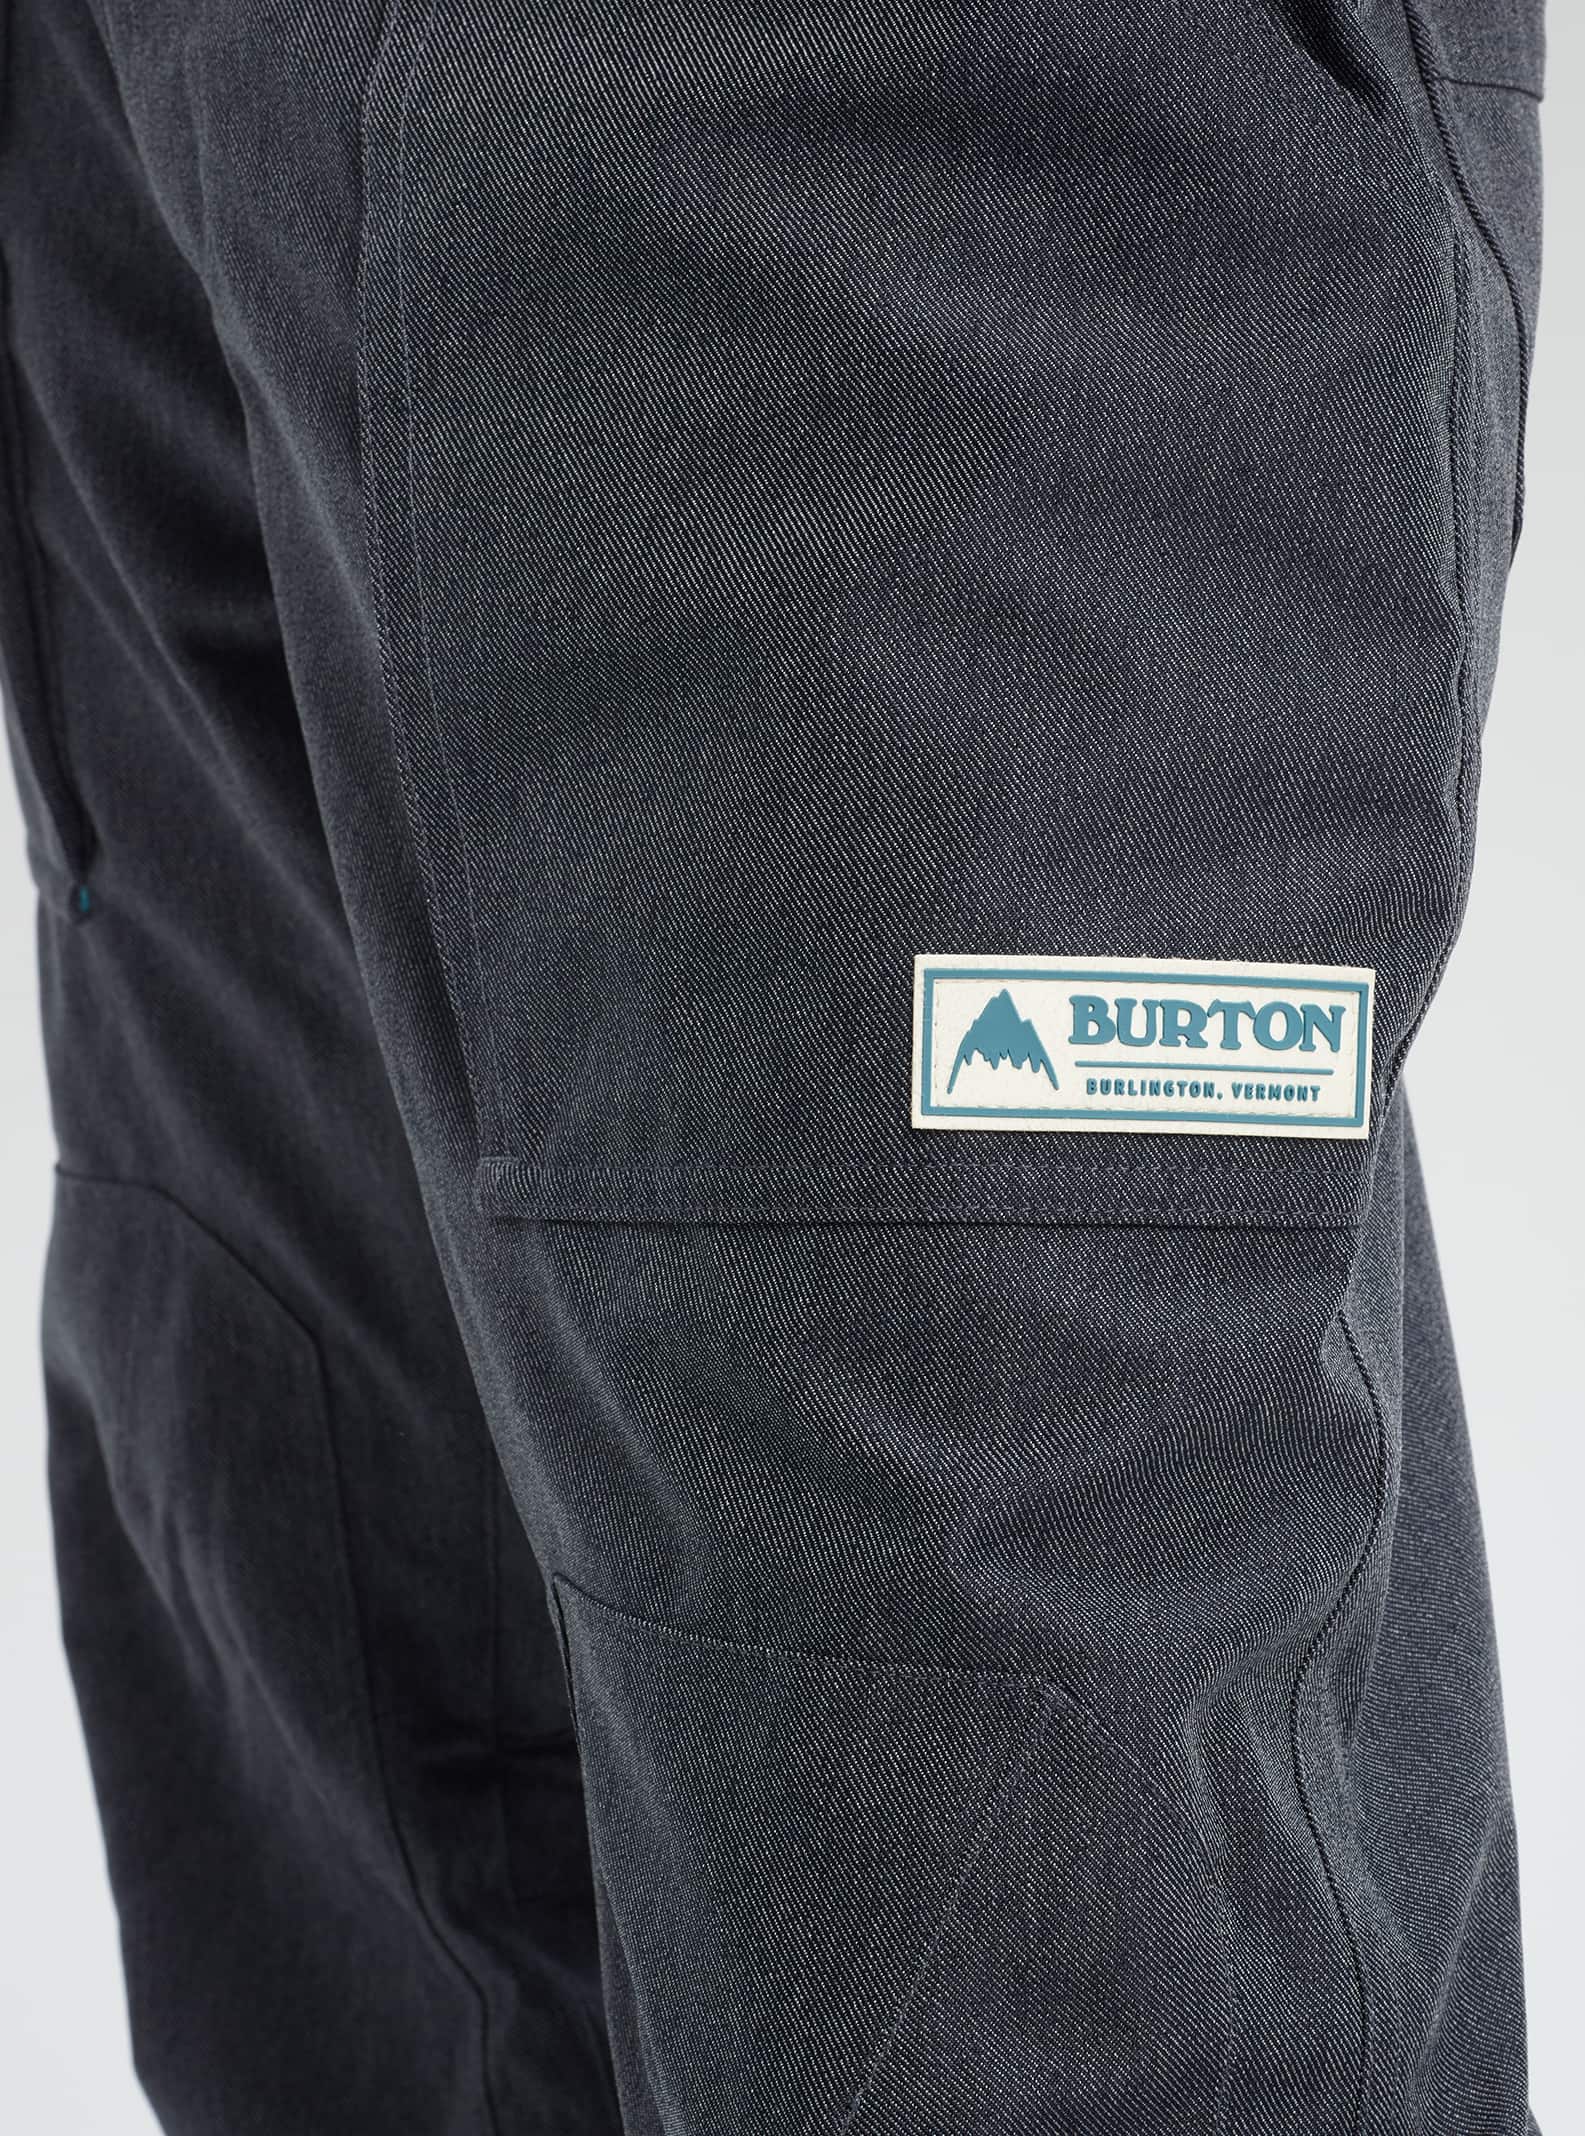 Men's Burton Southside Pant - Regular Fit | Burton.com Winter 2020 US